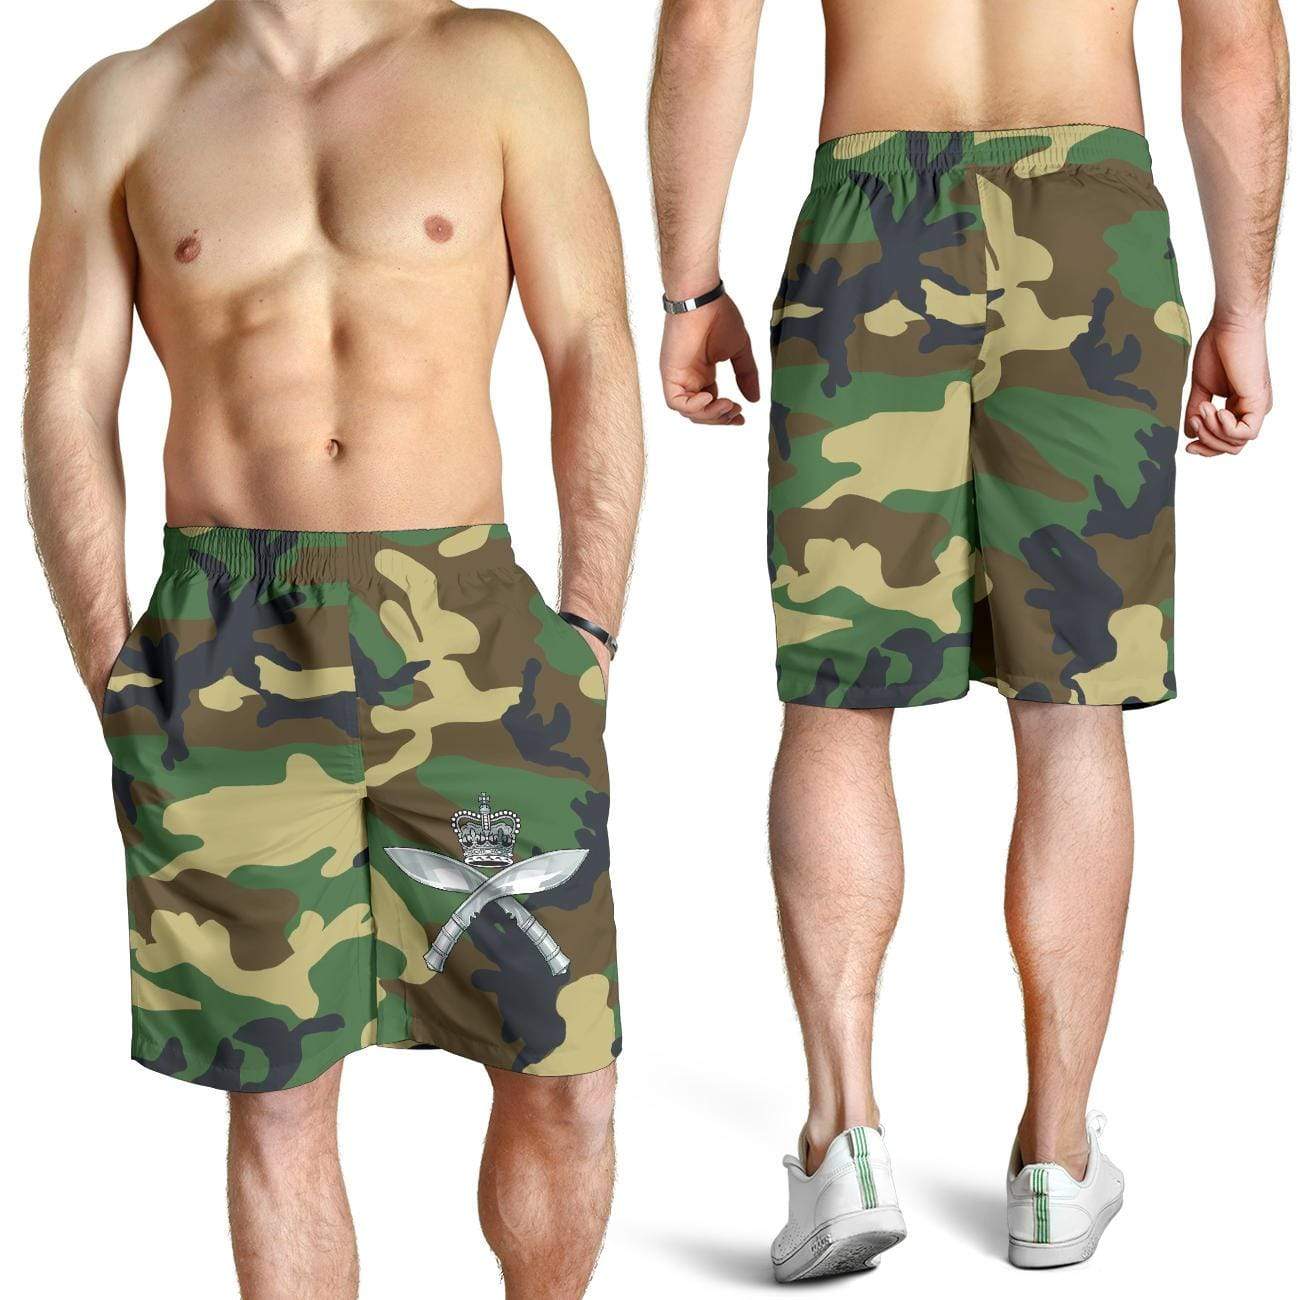 shorts S The Royal Gurkha Camo Men's Shorts